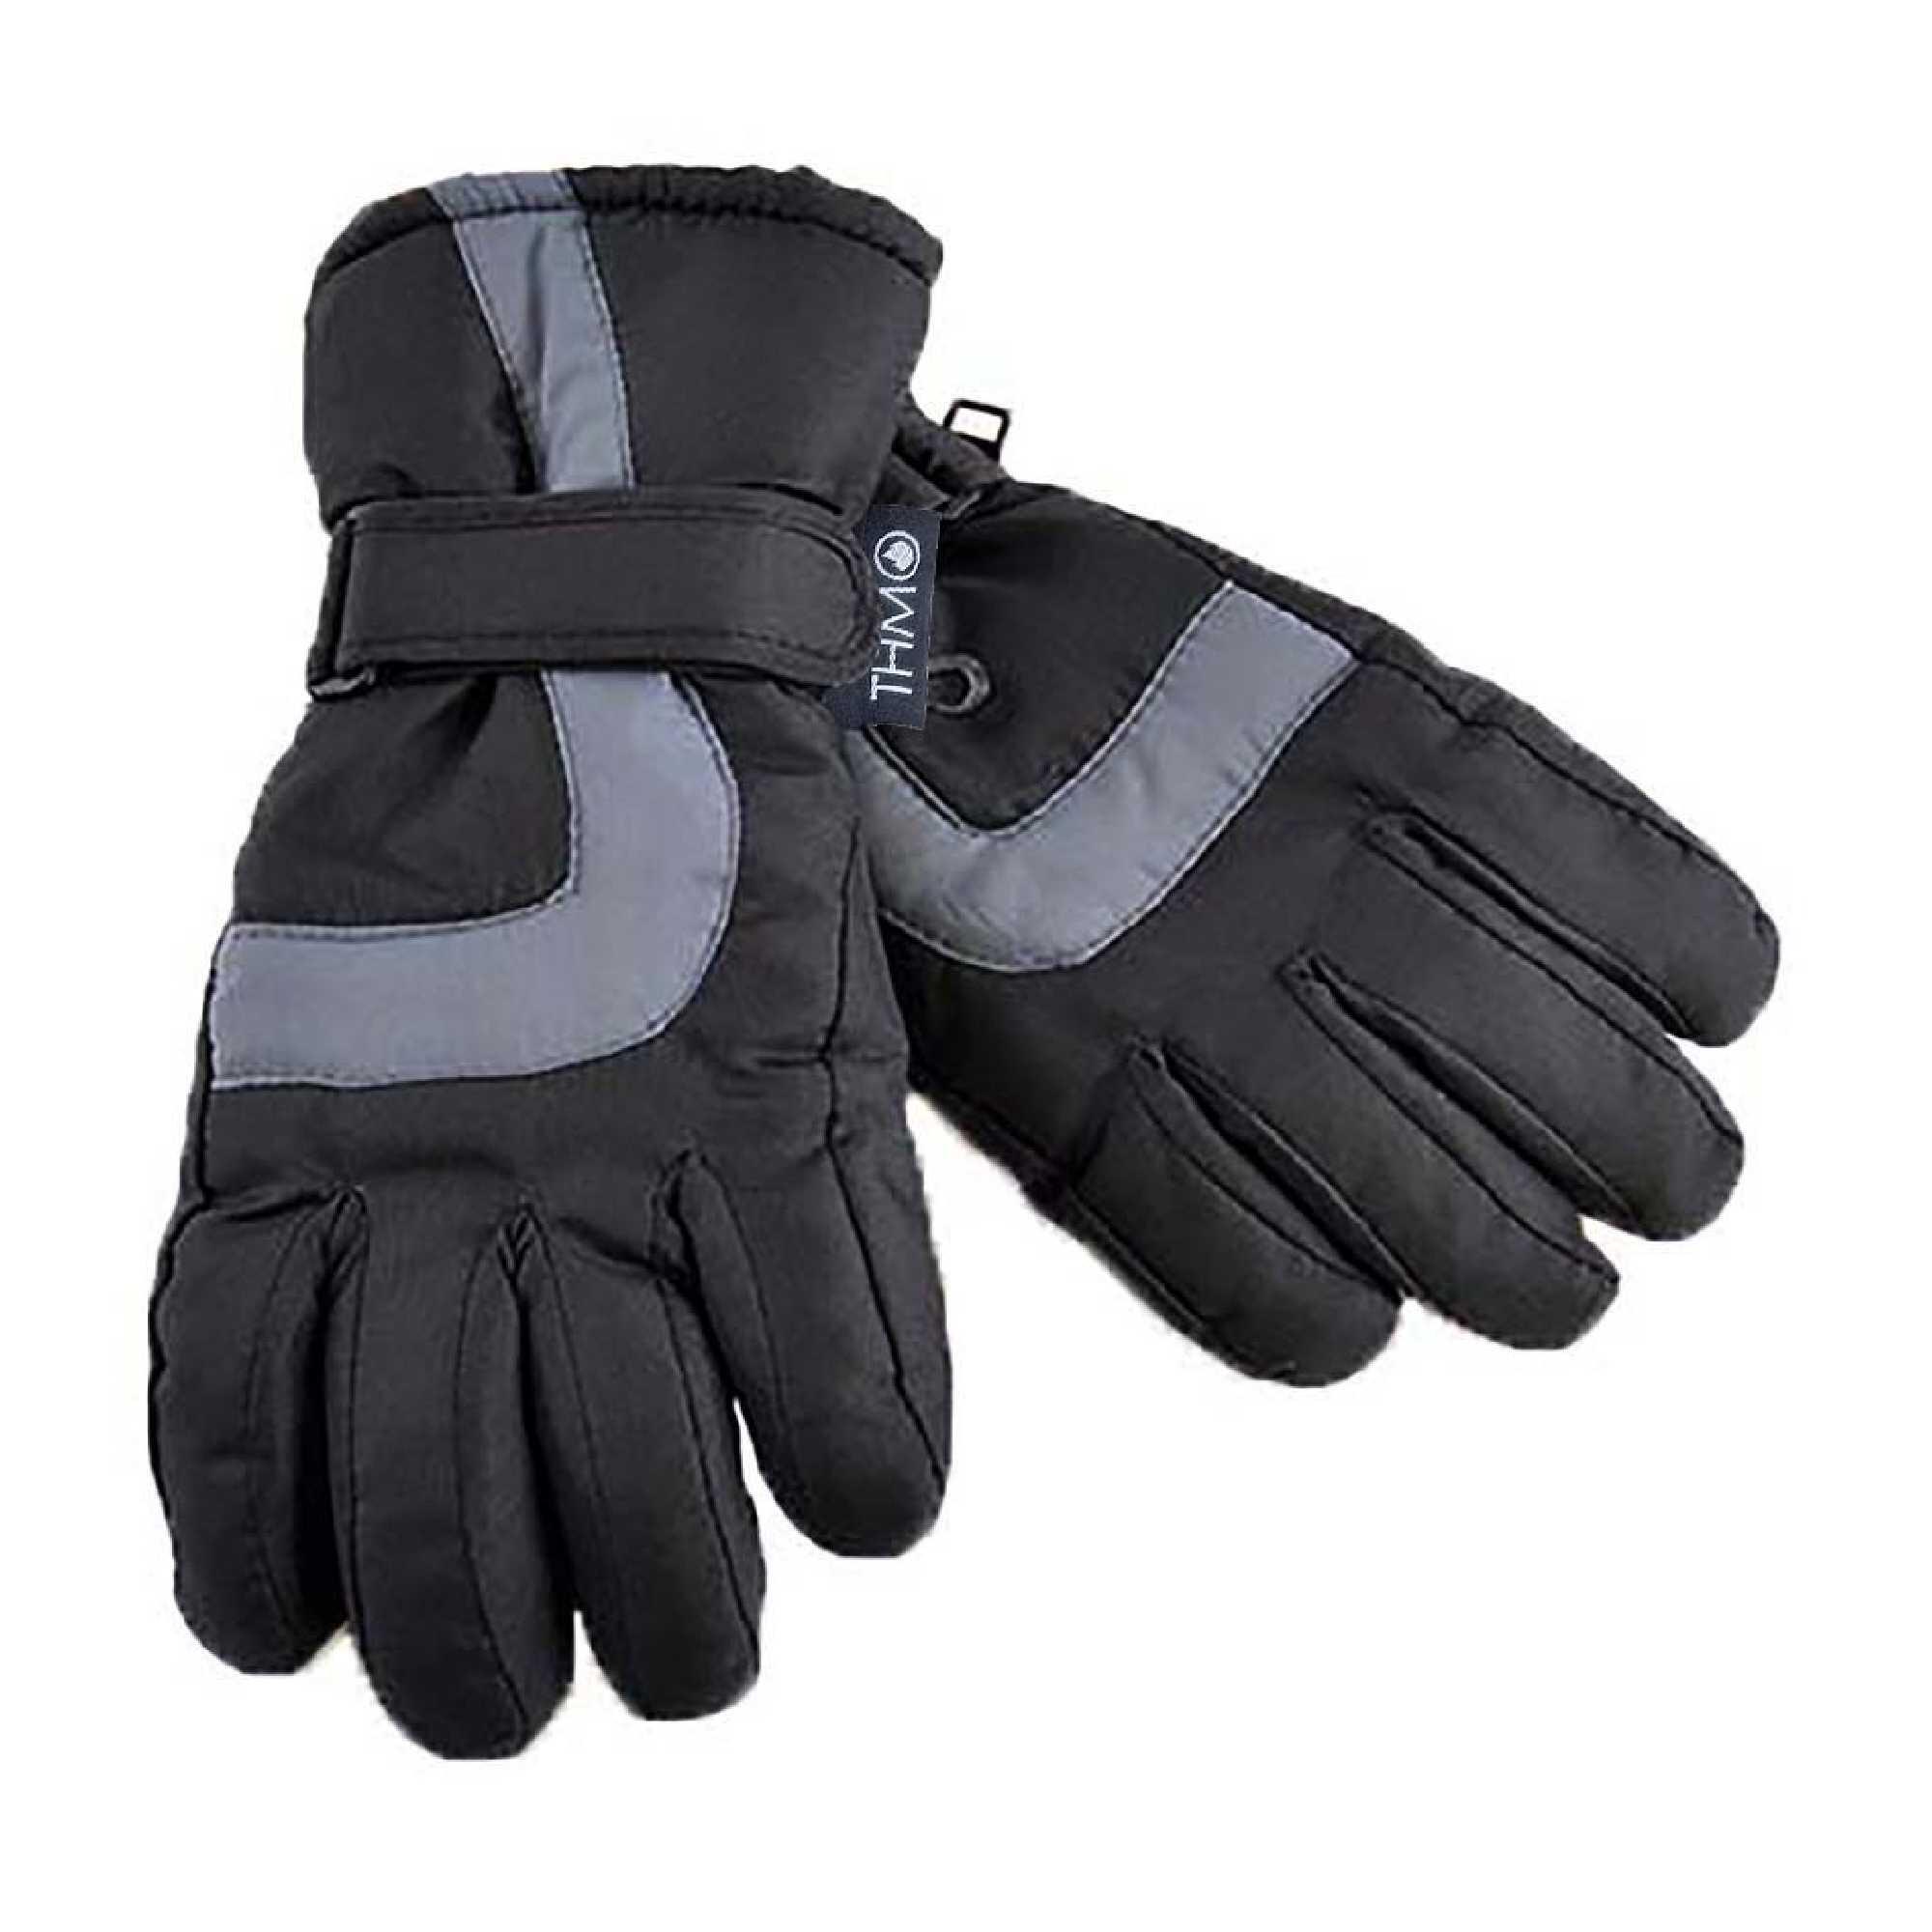 THMO Kids Thinsulate Ski Gloves | Waterproof Fleece Lined Thermal Winter Ski Gloves